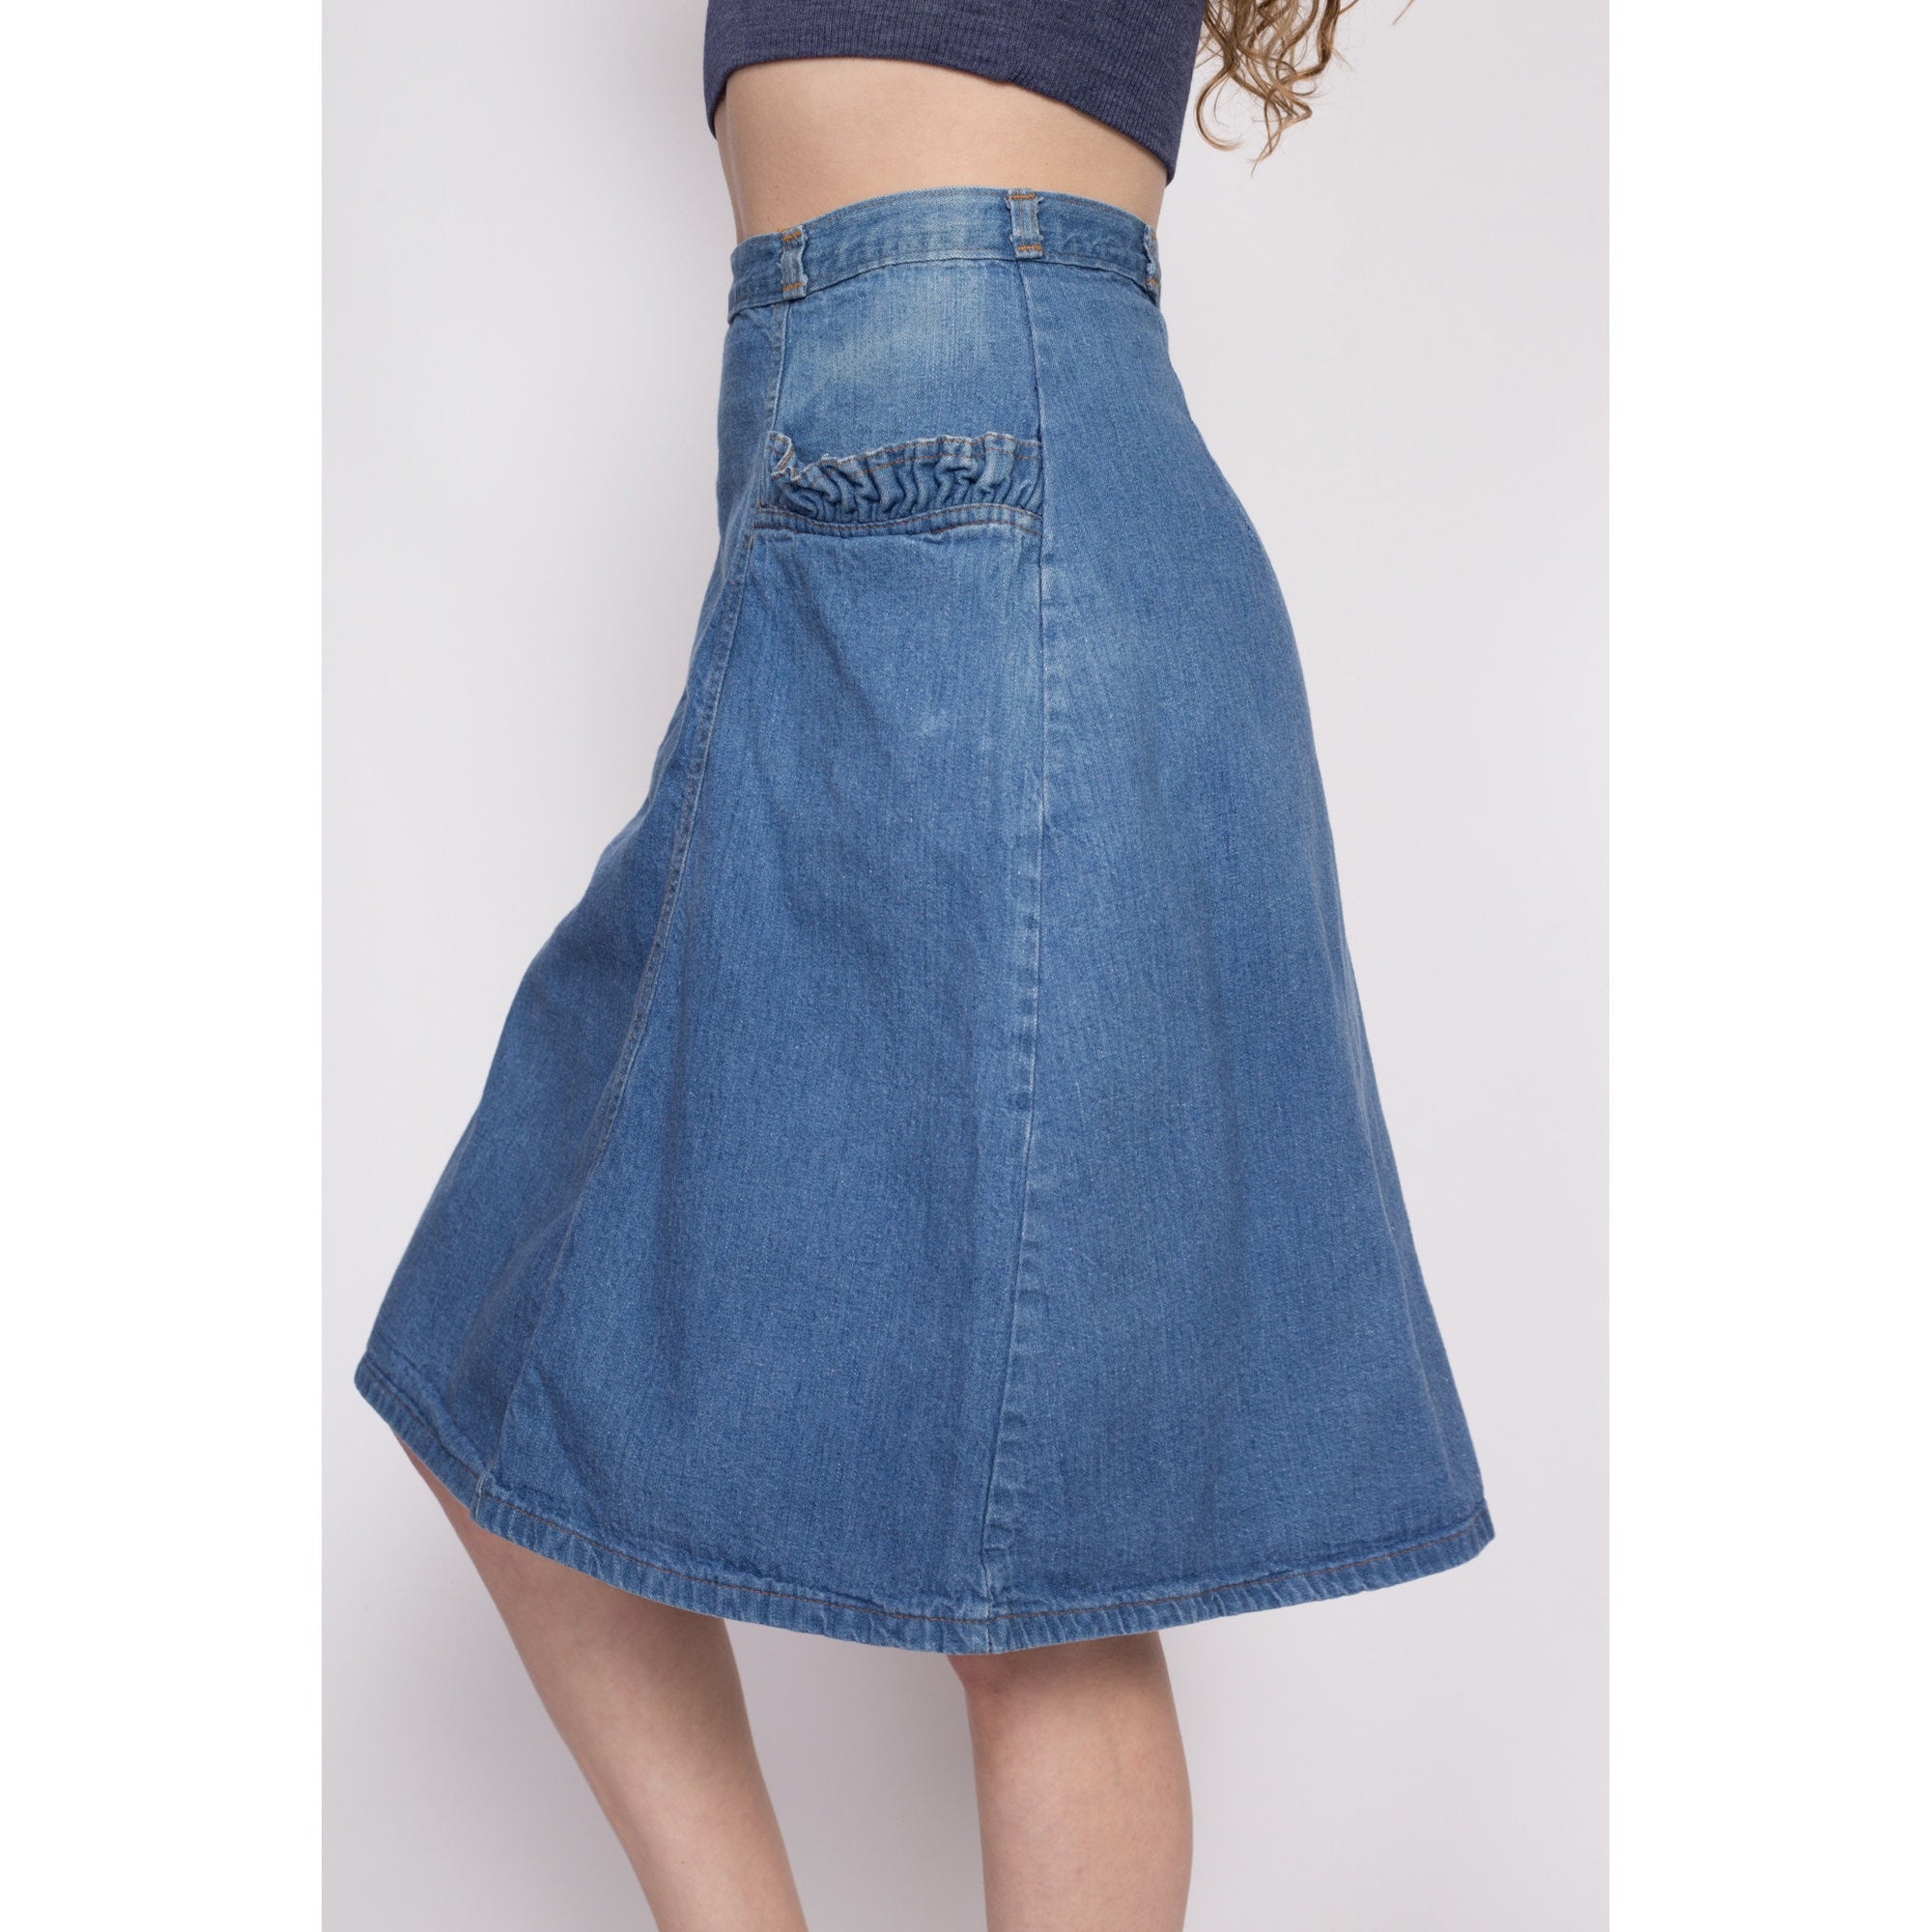 70s Denim Ruffle Pocket A-Line Skirt - Small, 27